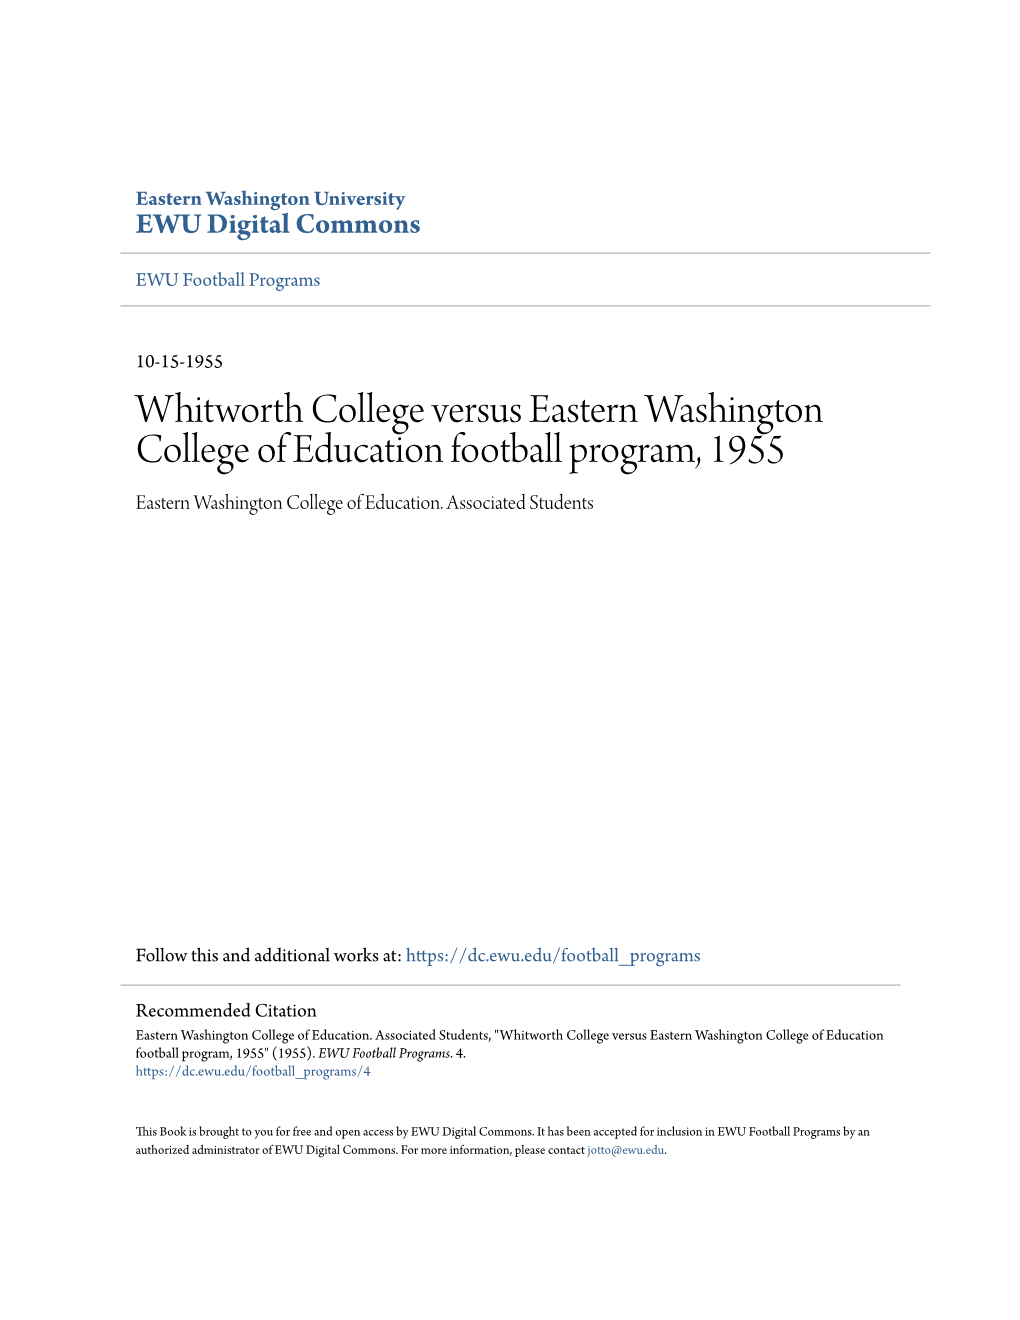 Whitworth College Versus Eastern Washington College of Education Football Program, 1955 Eastern Washington College of Education